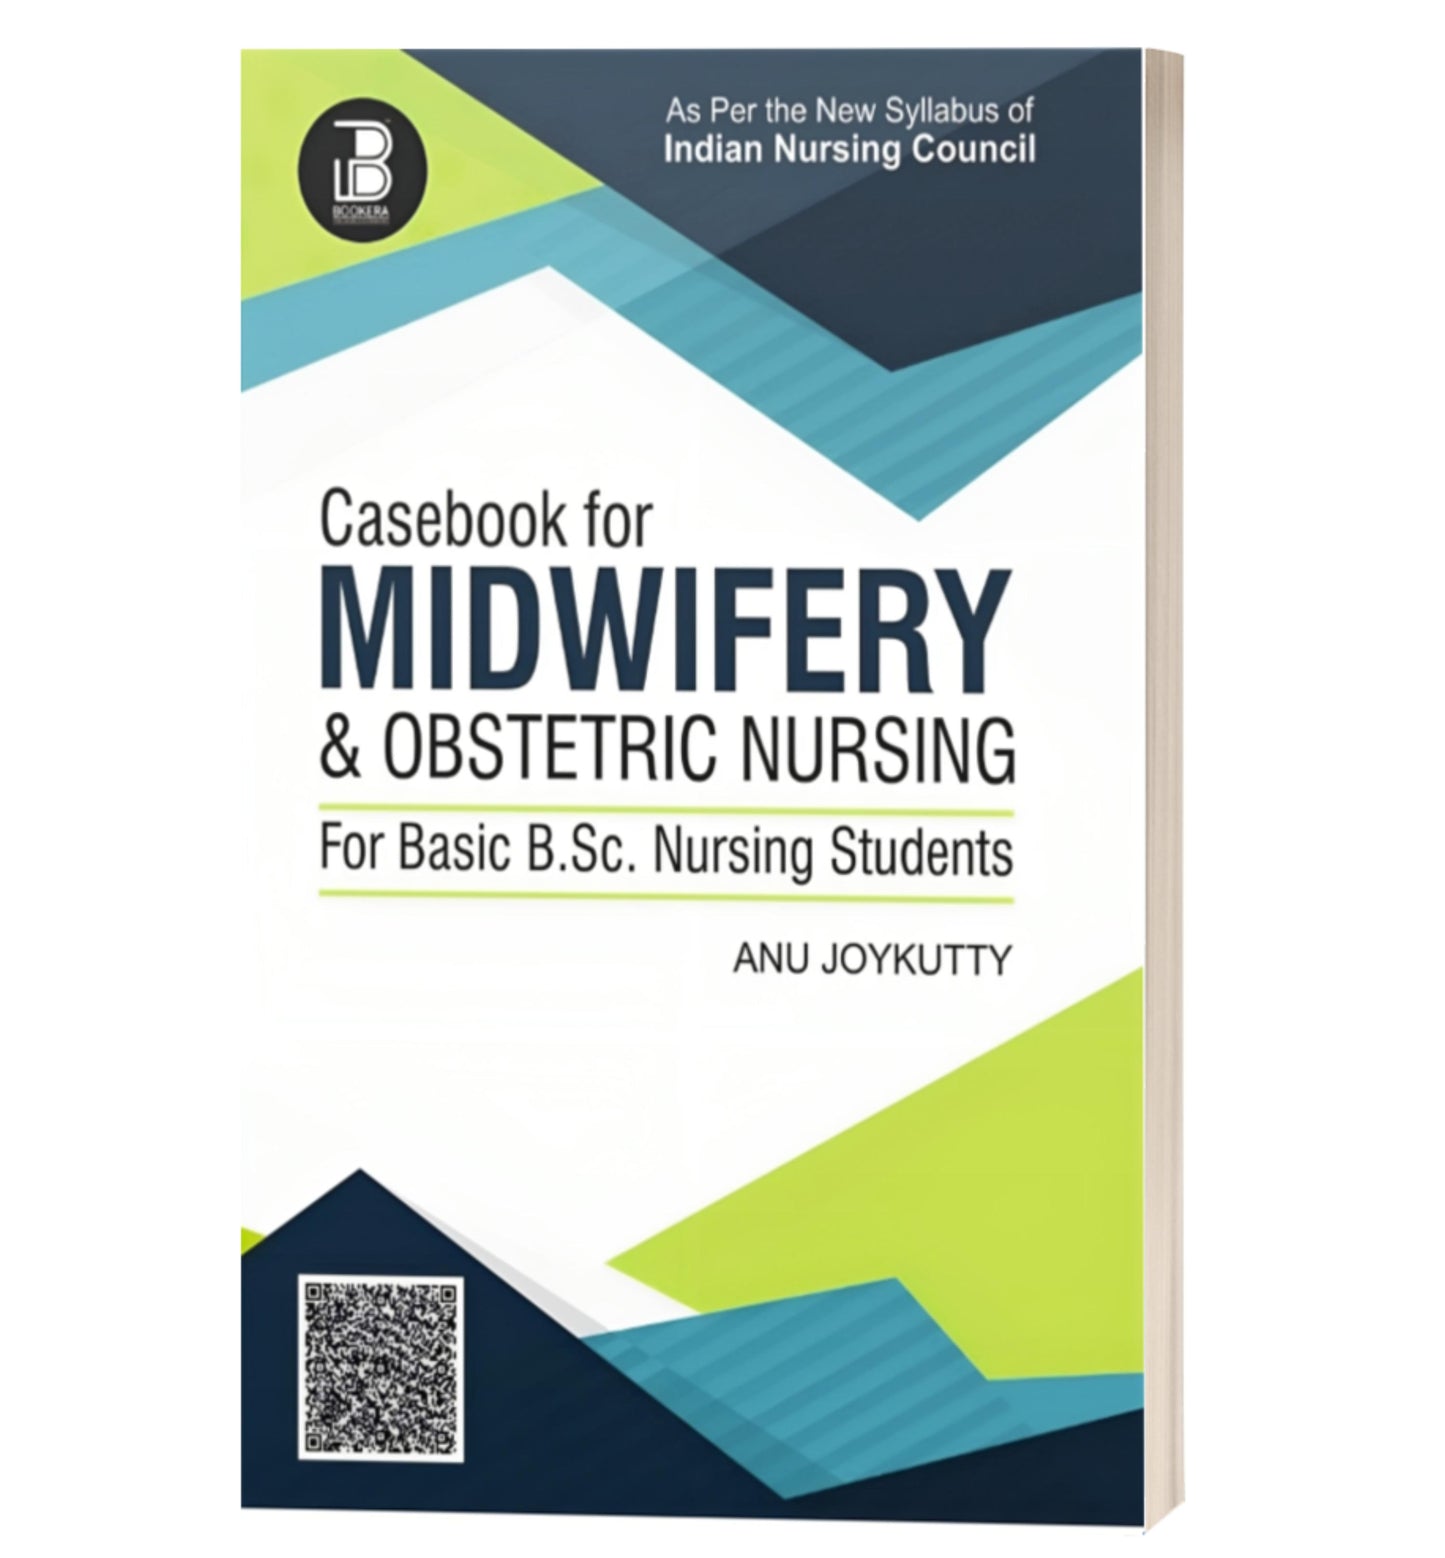 Casebook for Midwifery & Obstetric Nursing for B.Sc Nursing